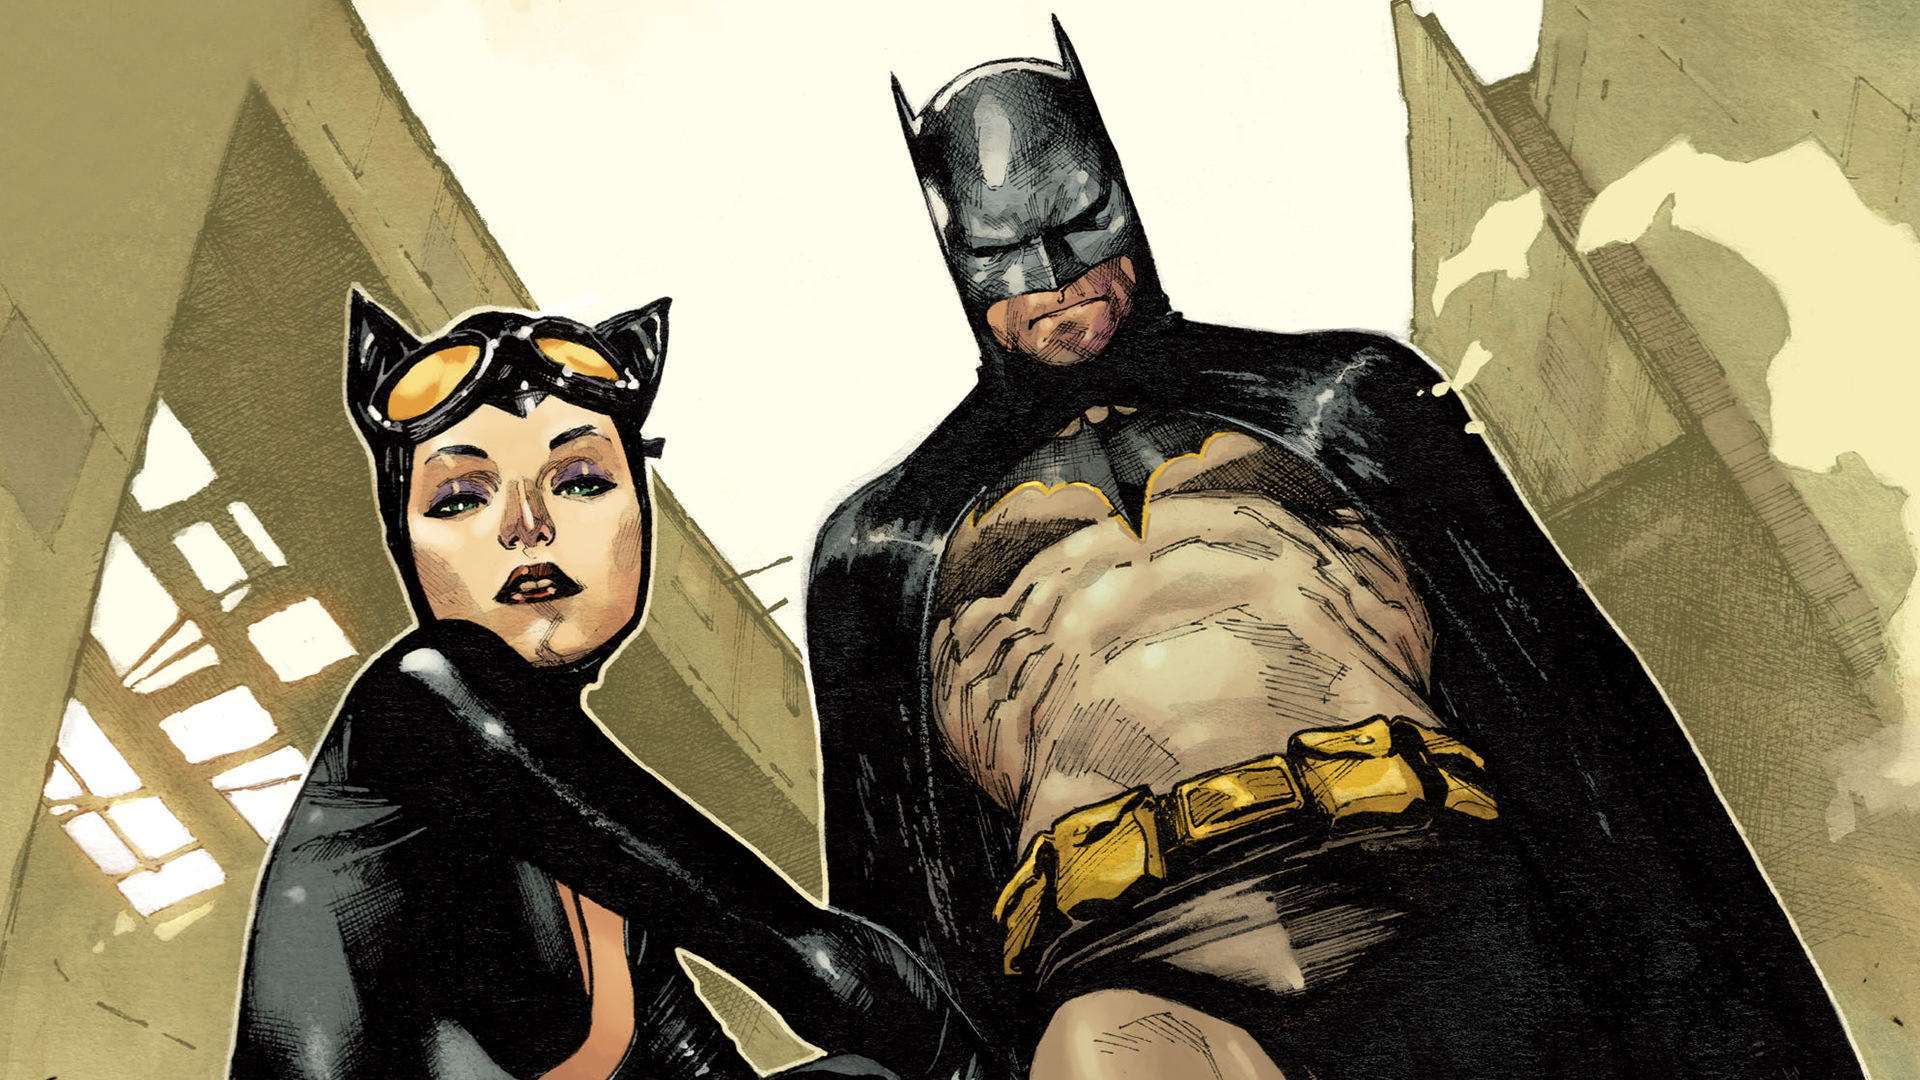 Скачать обои бесплатно Комиксы, Бэтмен, Комиксы Dc, Женщина Кошка картинка на рабочий стол ПК